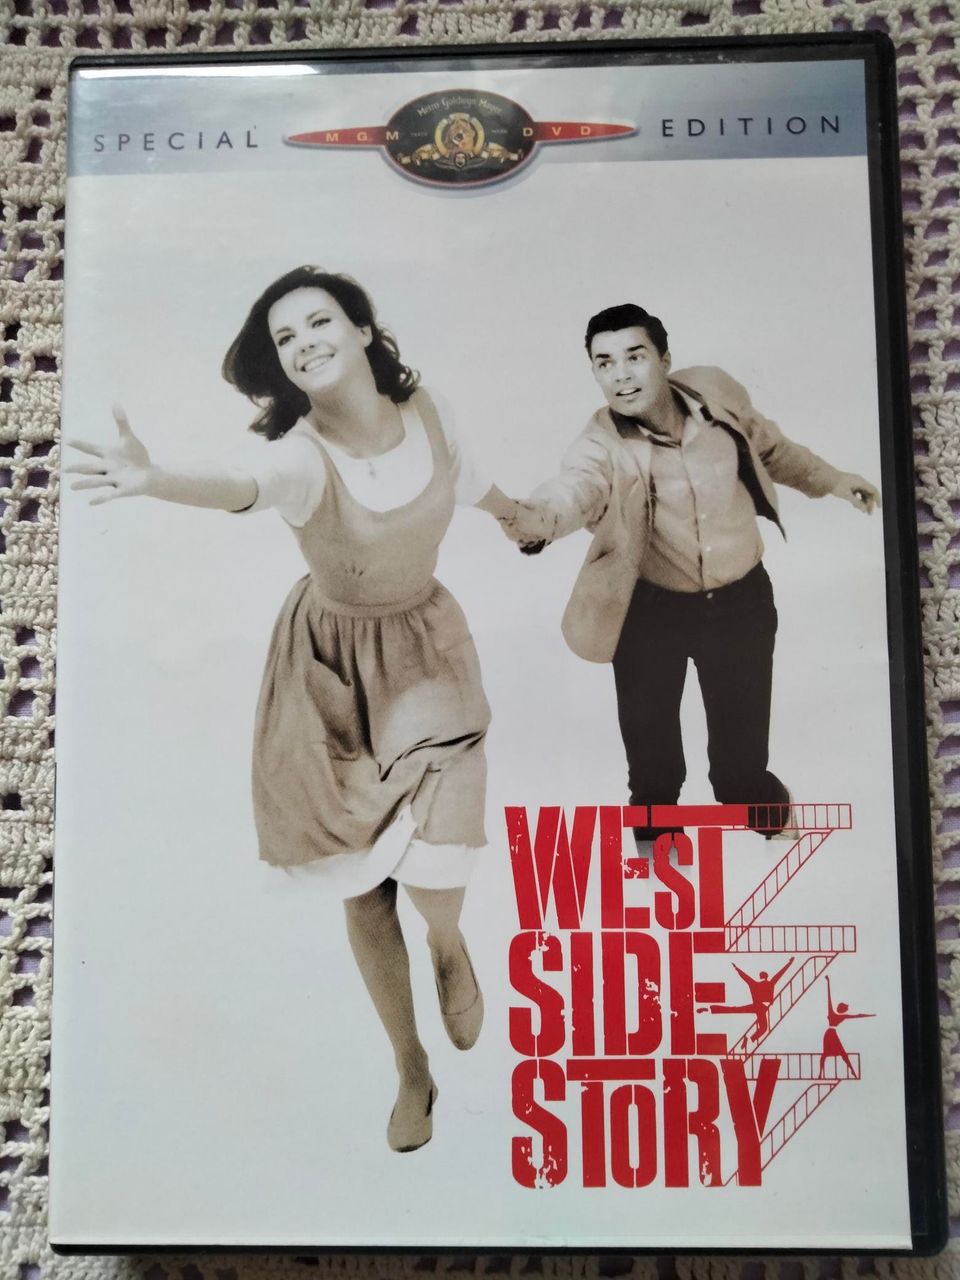 West side story dvd